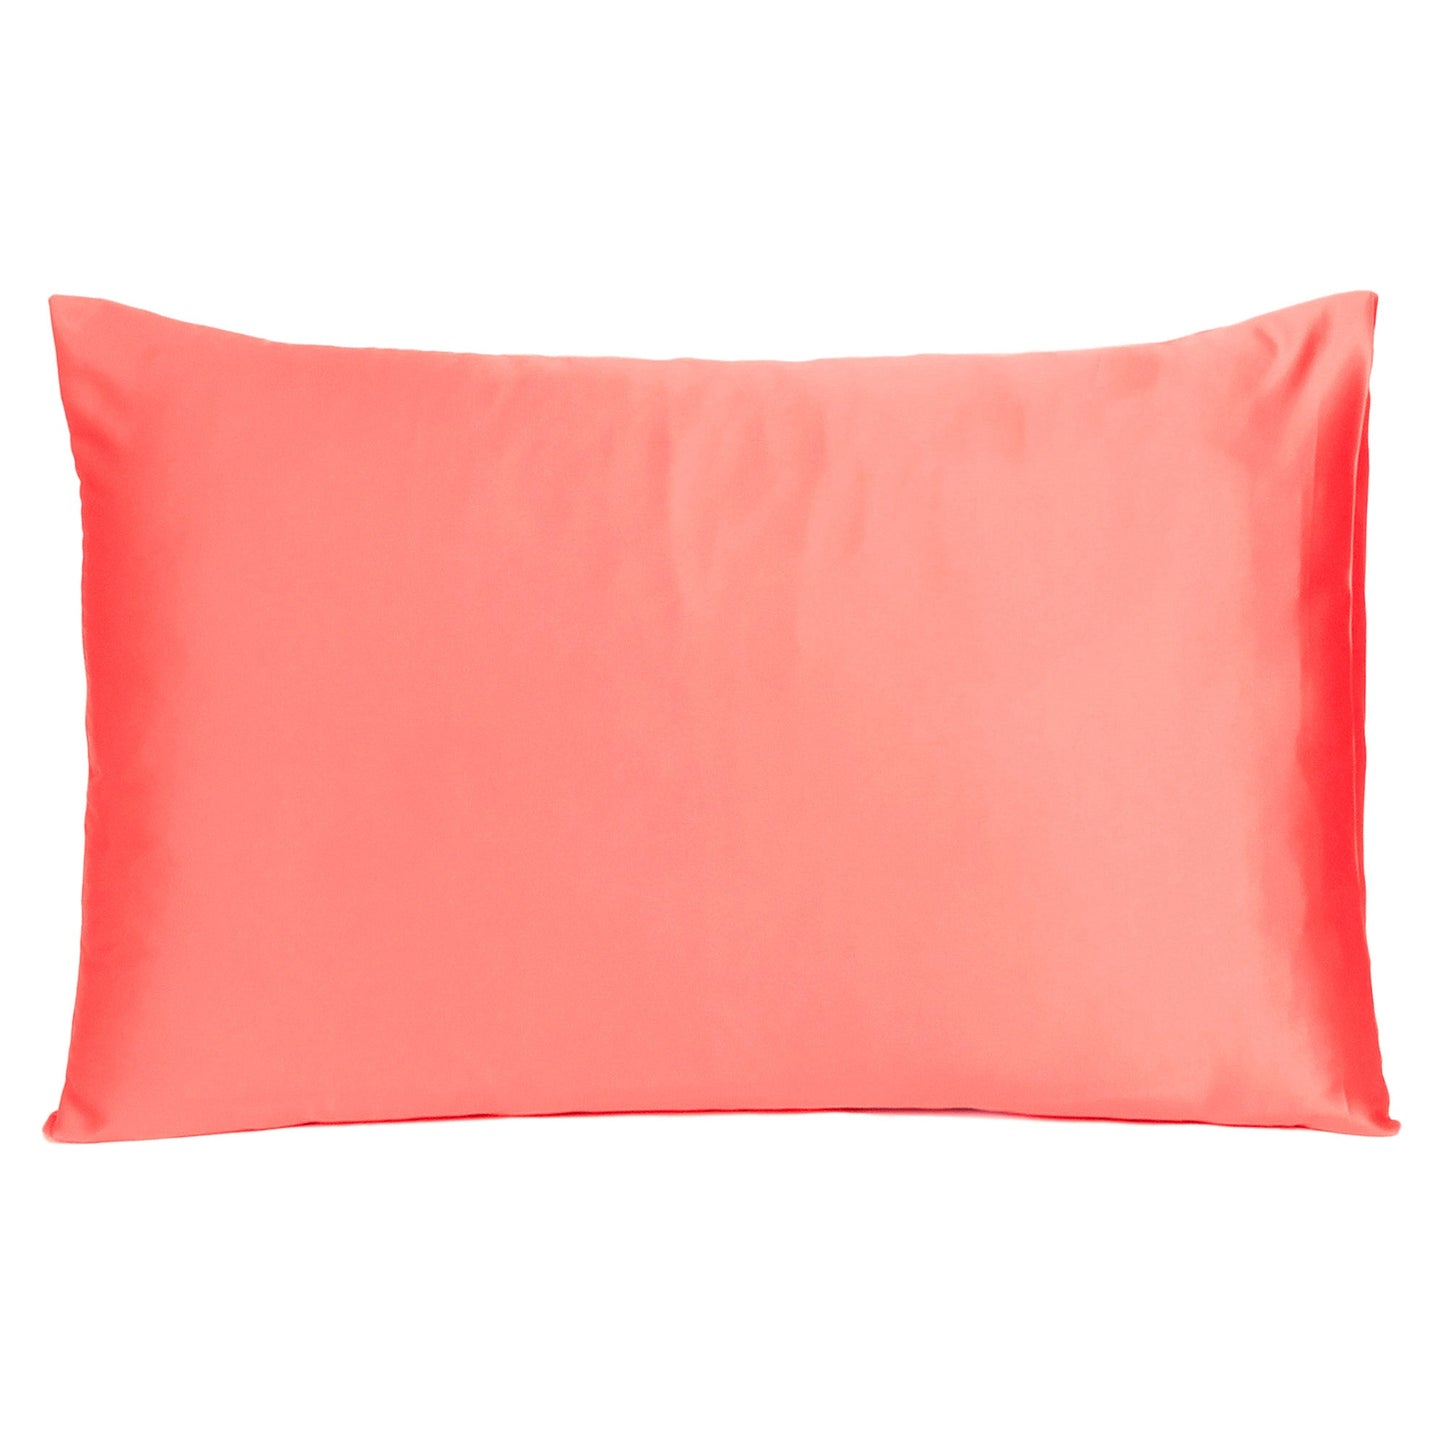 Luxury Soft Plain Satin Silk Pillowcases in Set of 2 - Salmon Rose